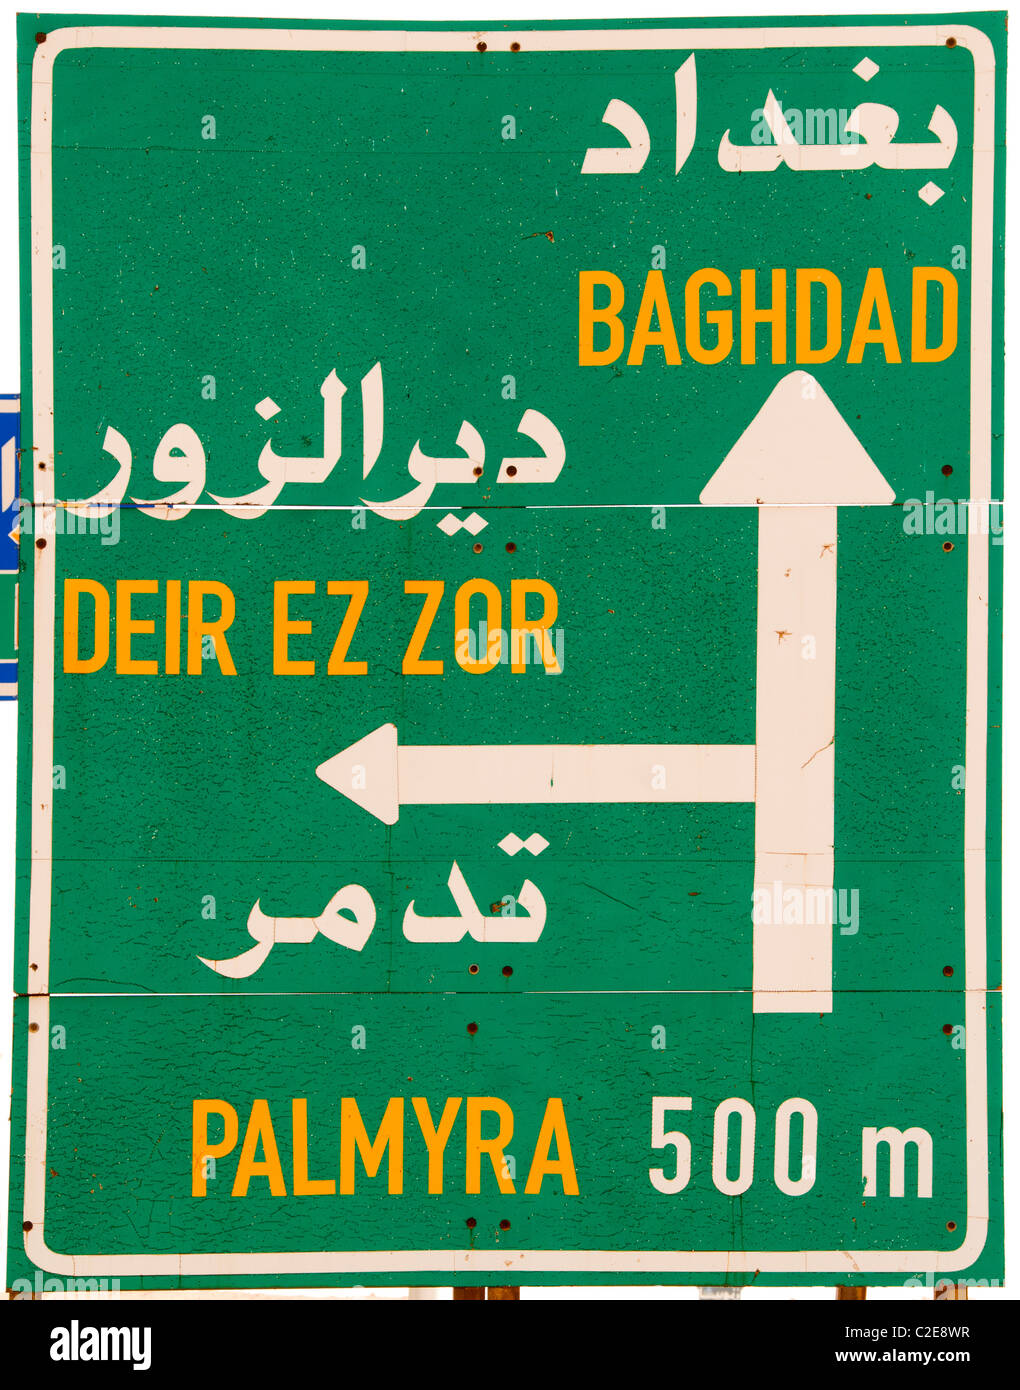 Damascus Iraq Attane Syria Road traffic Sign truck Stock Photo